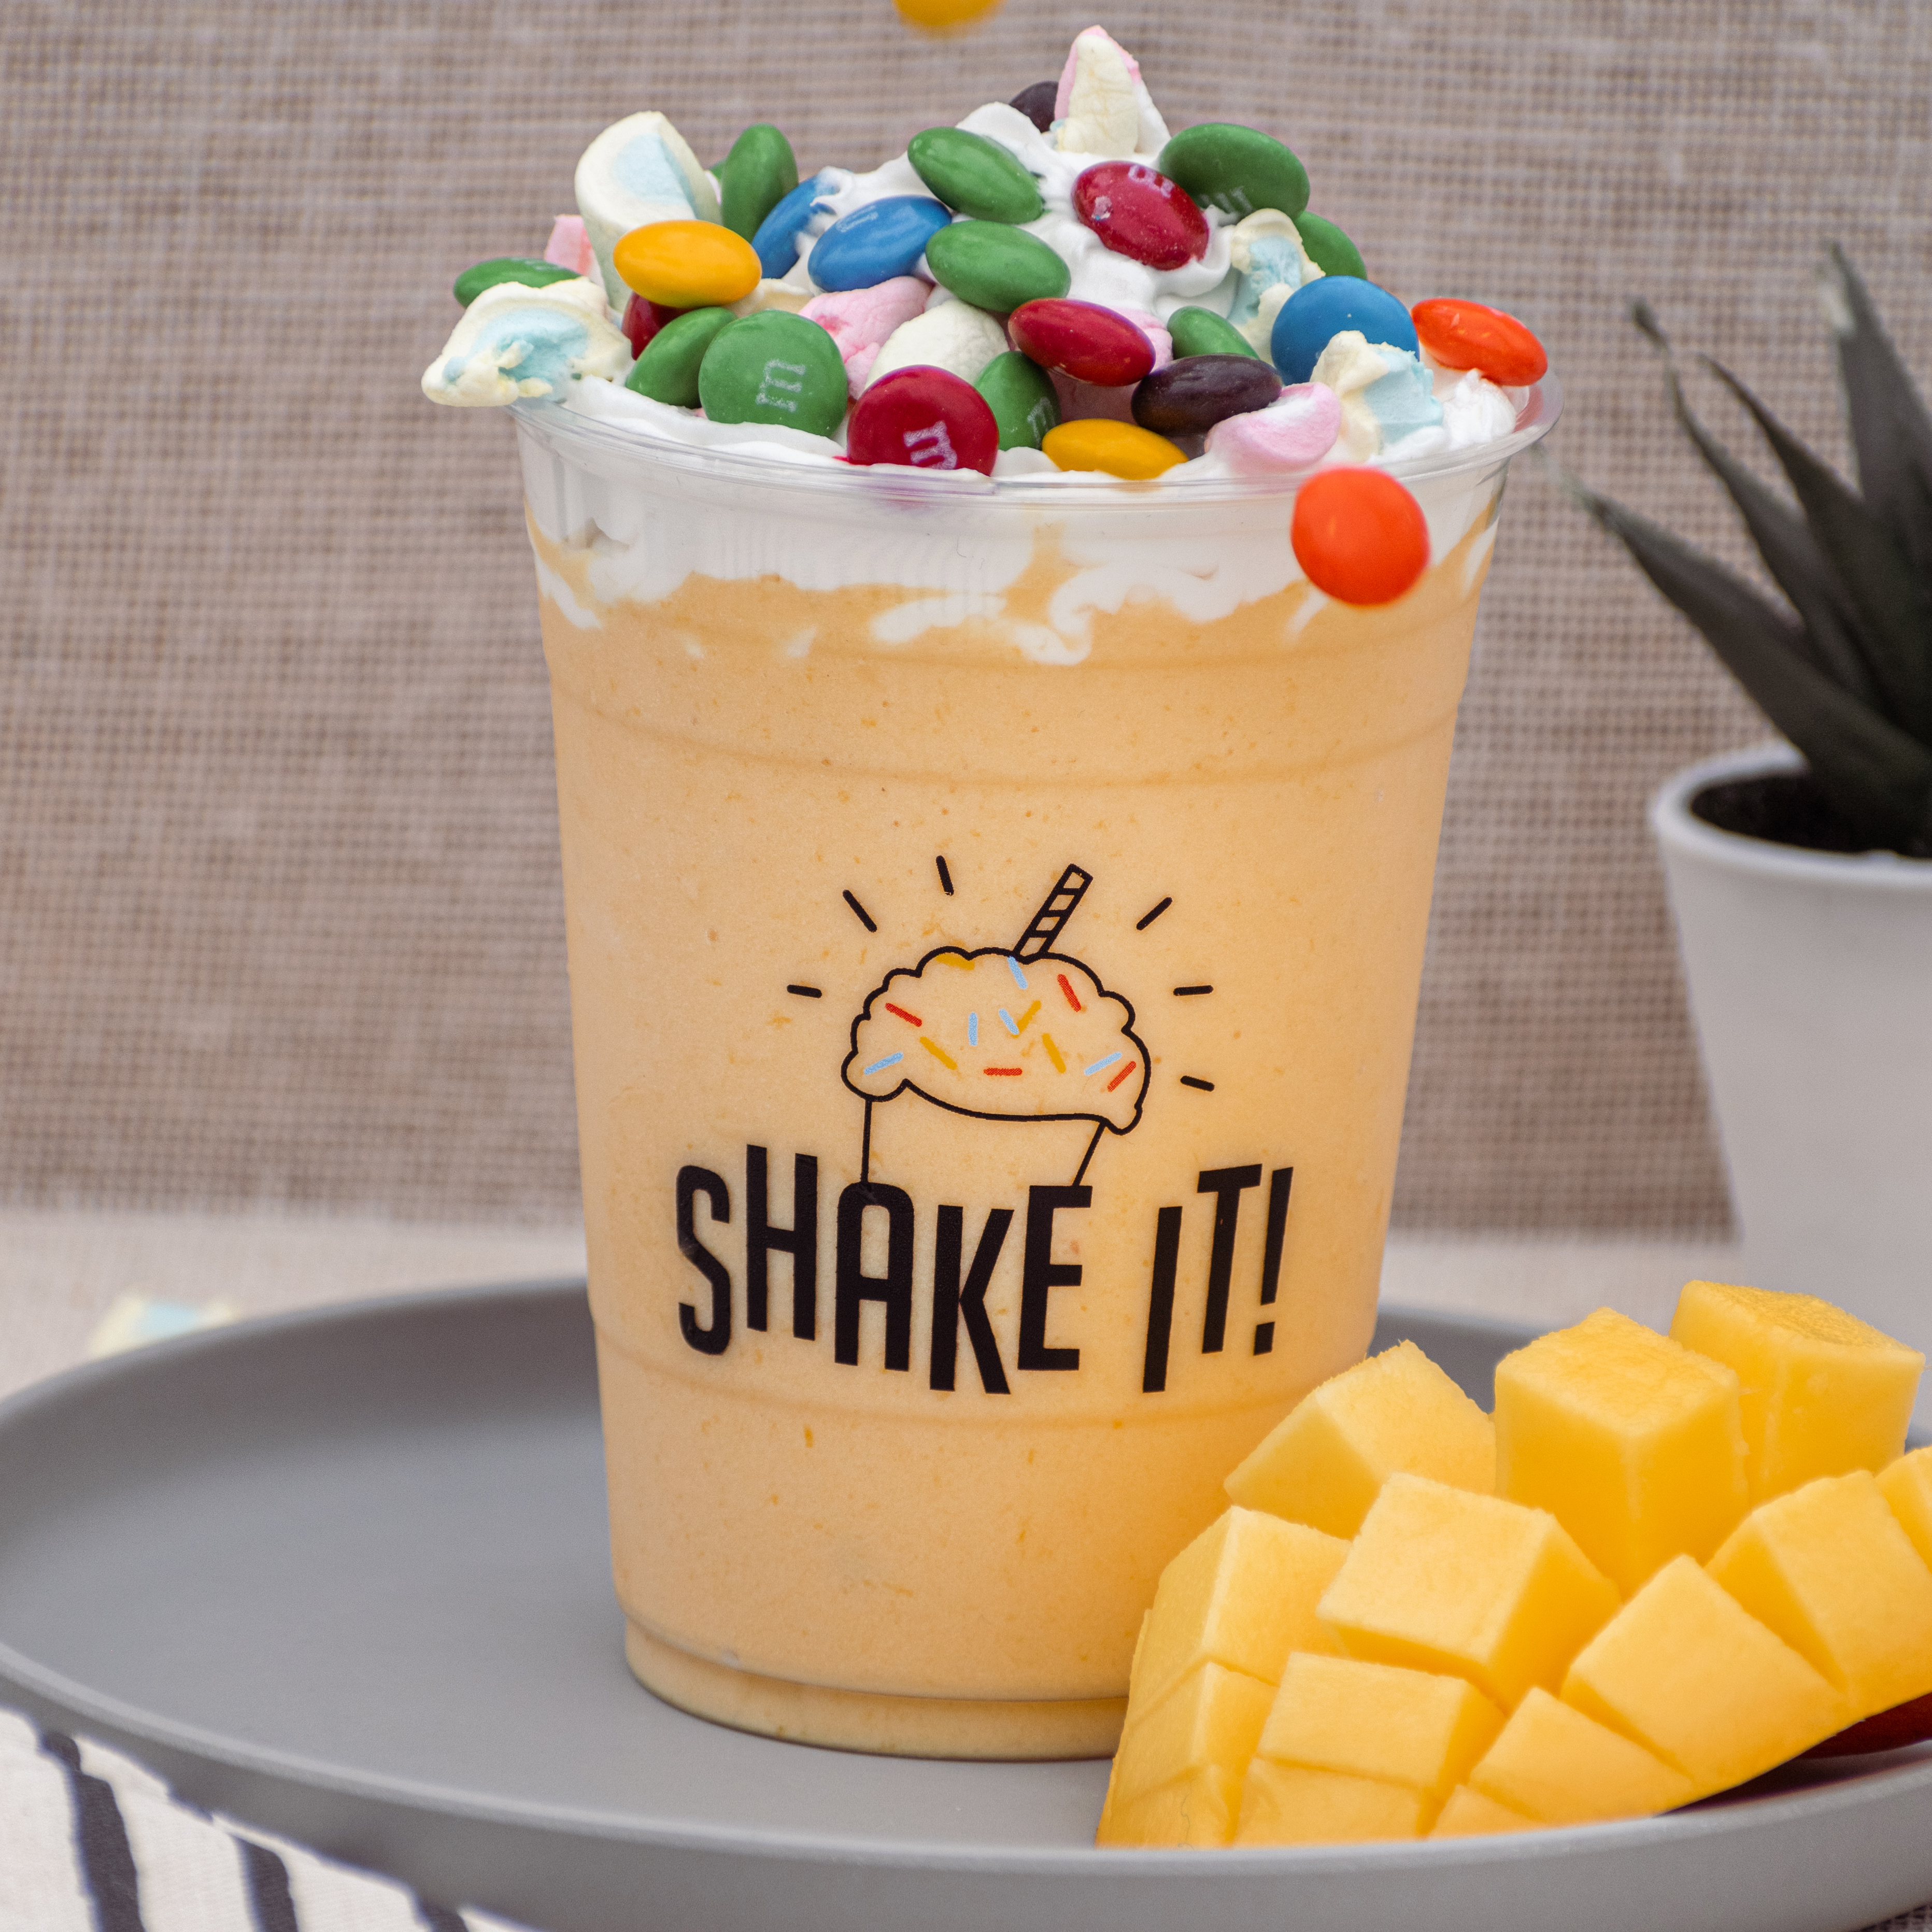 Shake de mango con leche, mashmellow y M&M